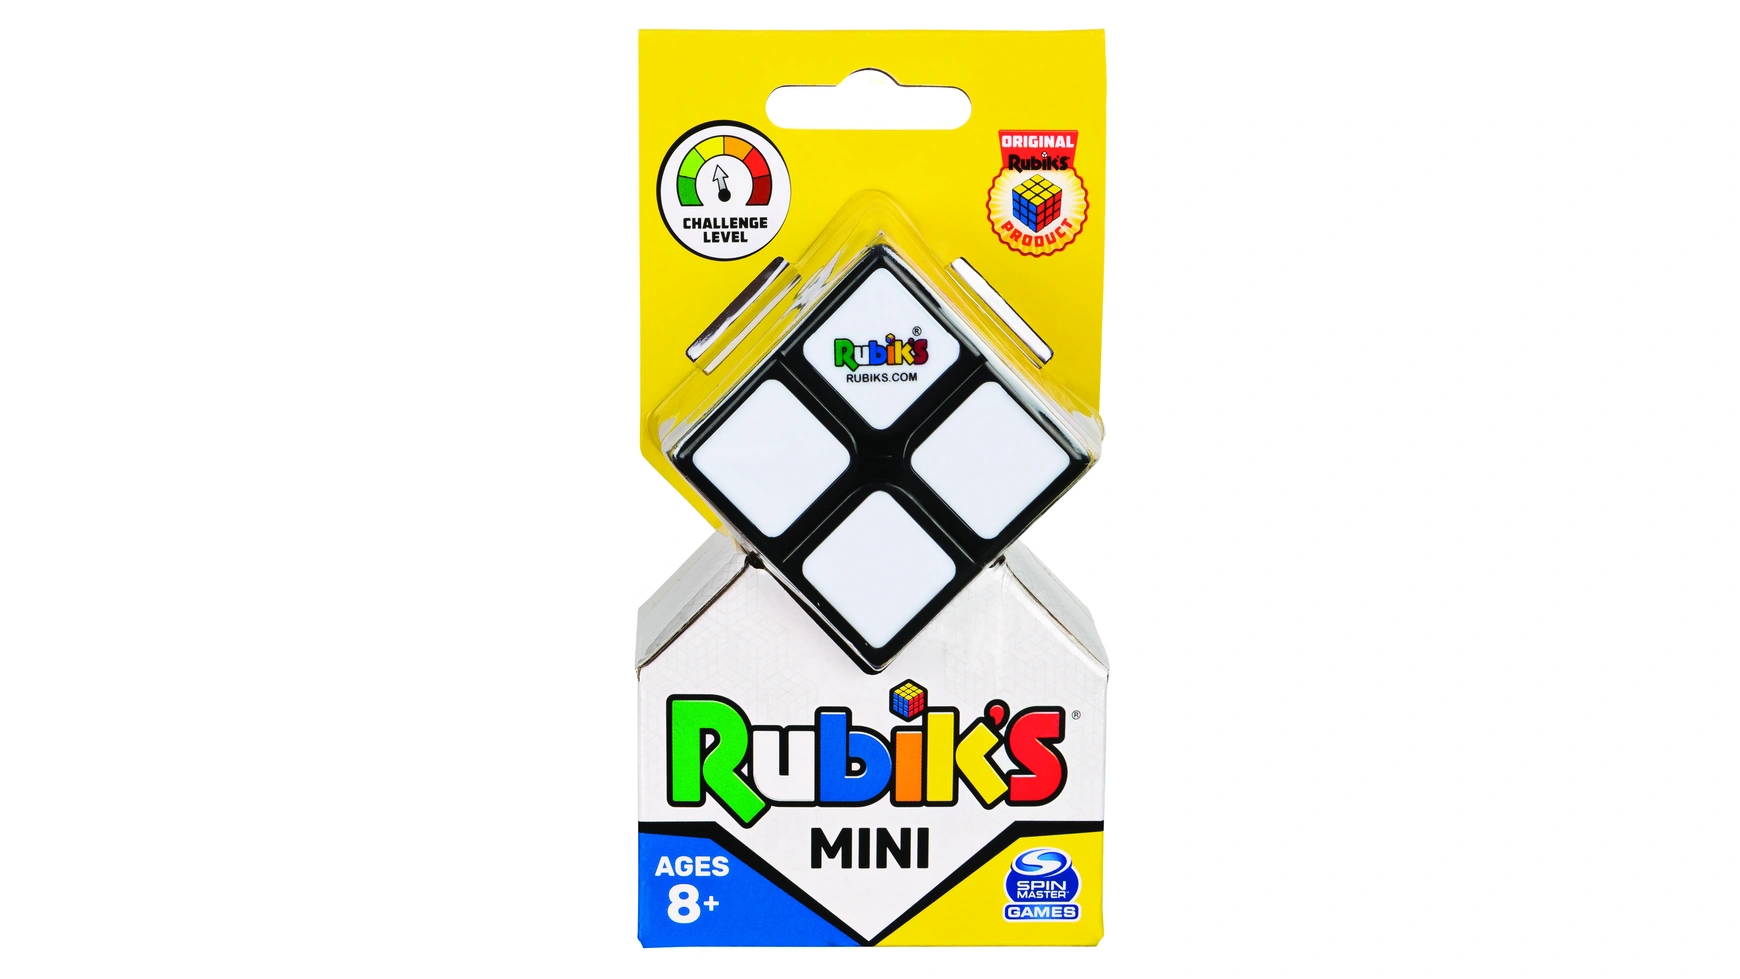 Rubik's Mini 2x2 Кубик Рубика кубик 2x2 для начинающих от 8 лет и для путешествий Spin Master rubik s кубик рубика 2х2